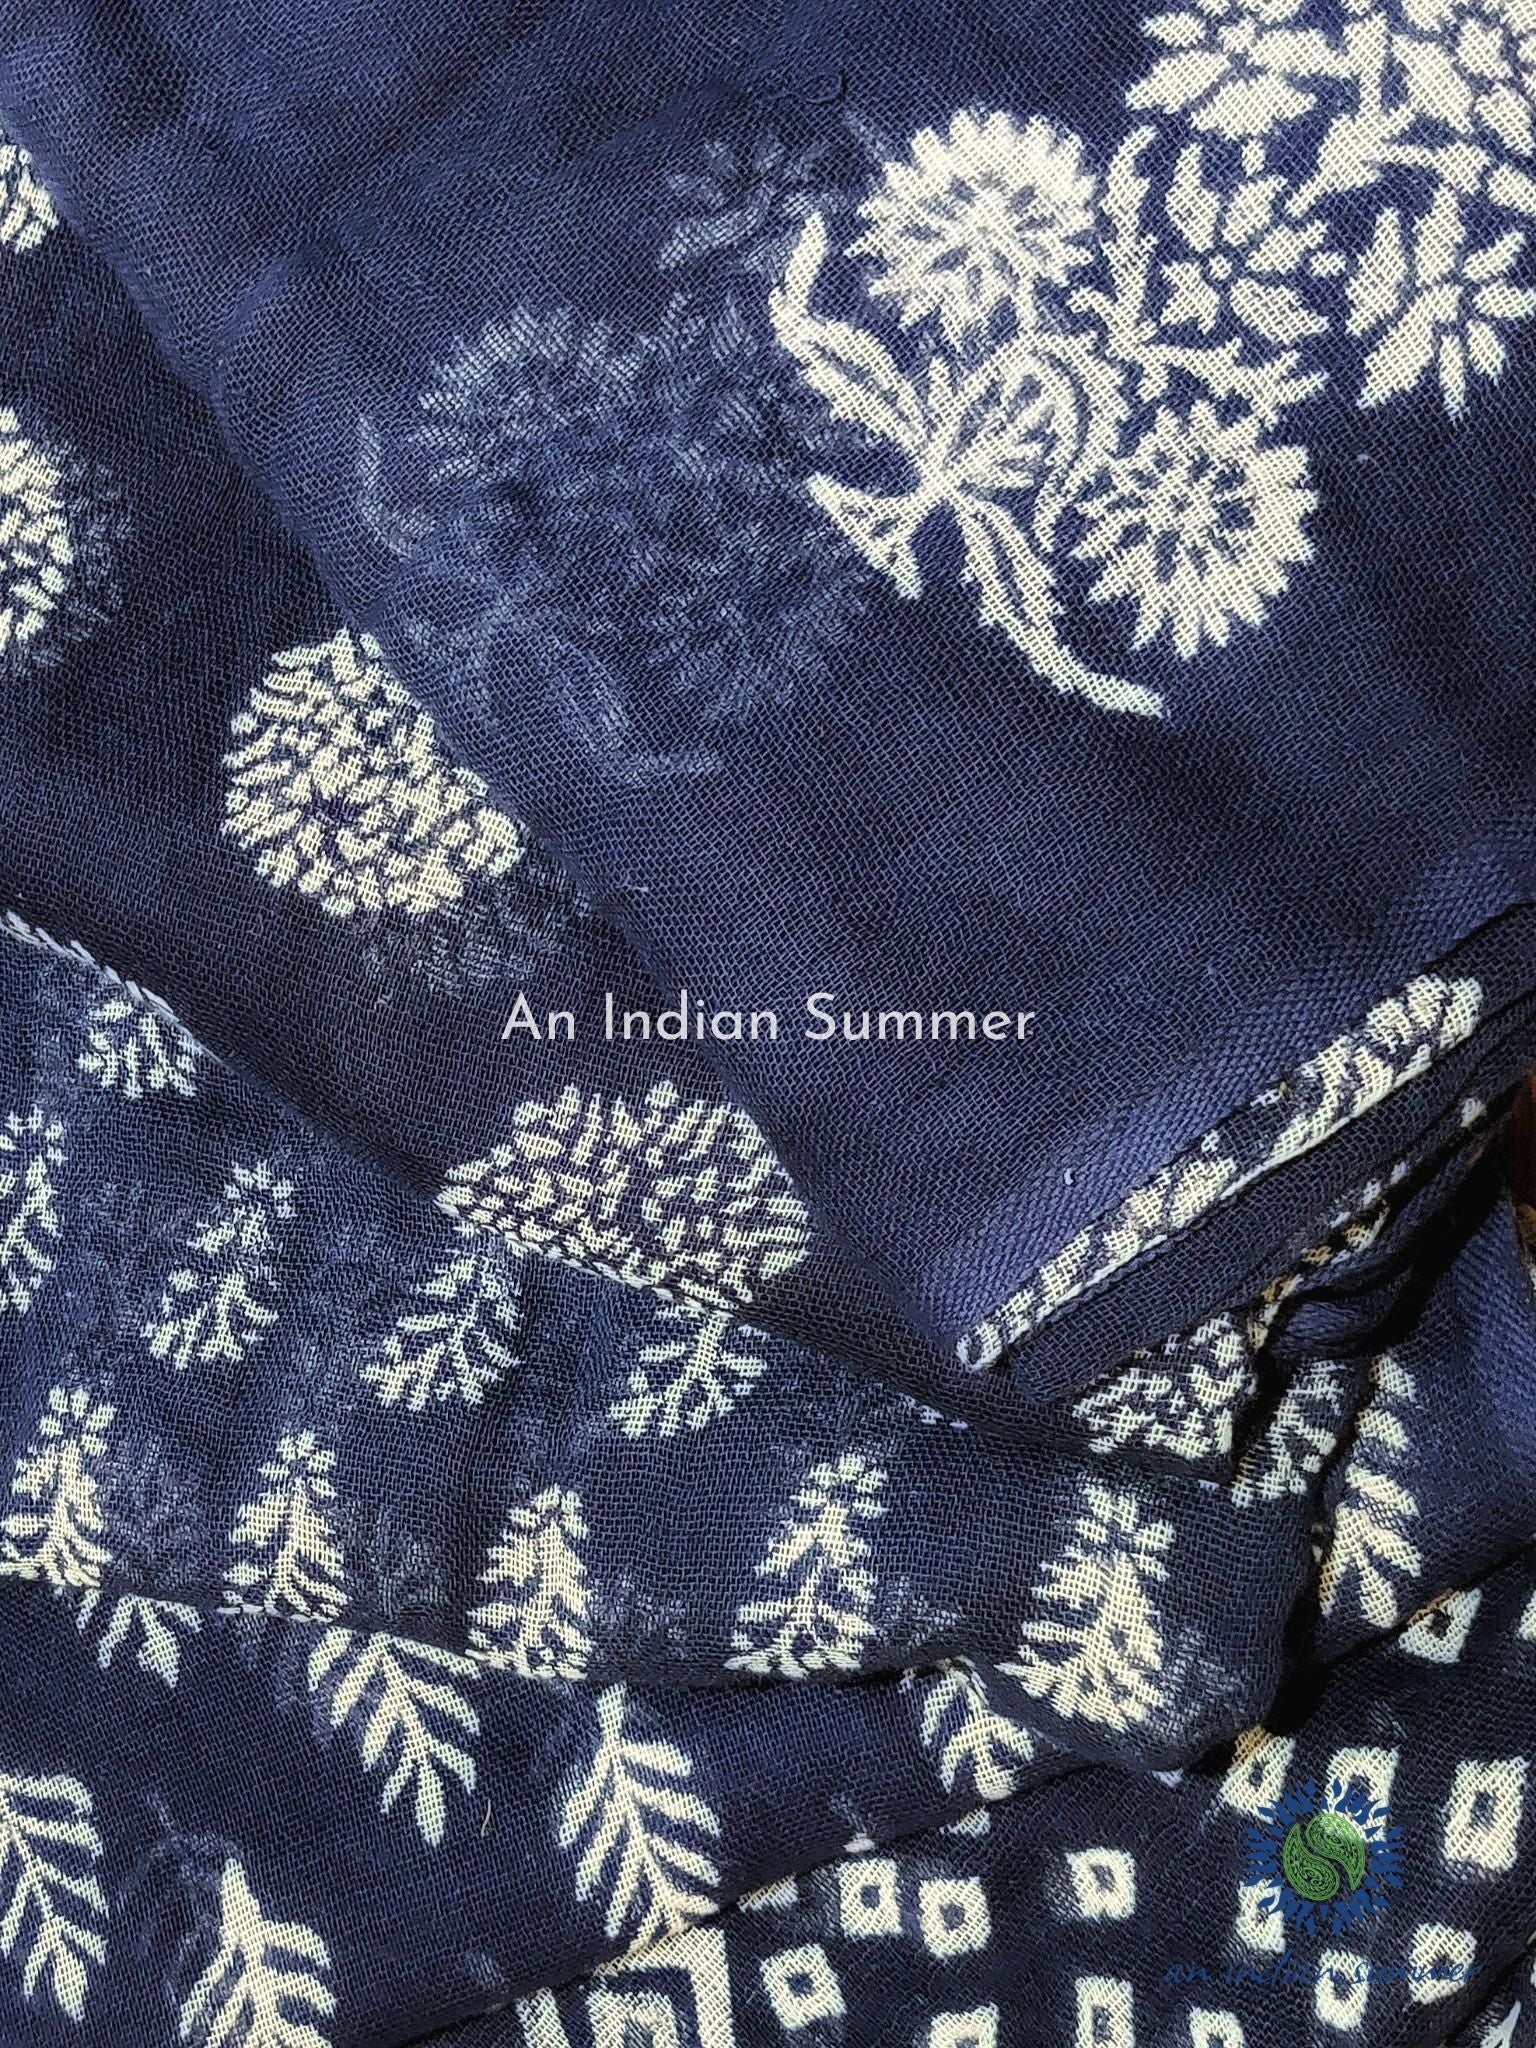 An Indian Summer All Designs Indigo Dyed Handloom Woven Hand Block Printed Cotton Gauze Scarf